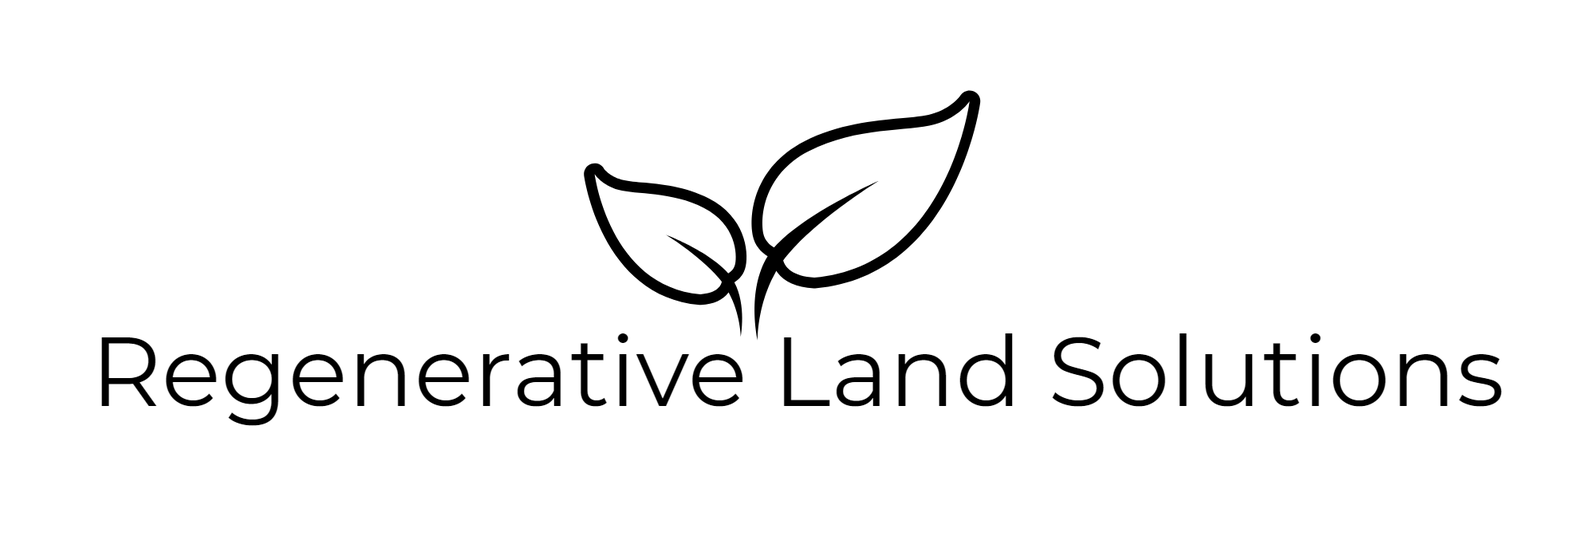 Regenerative land solutions logo